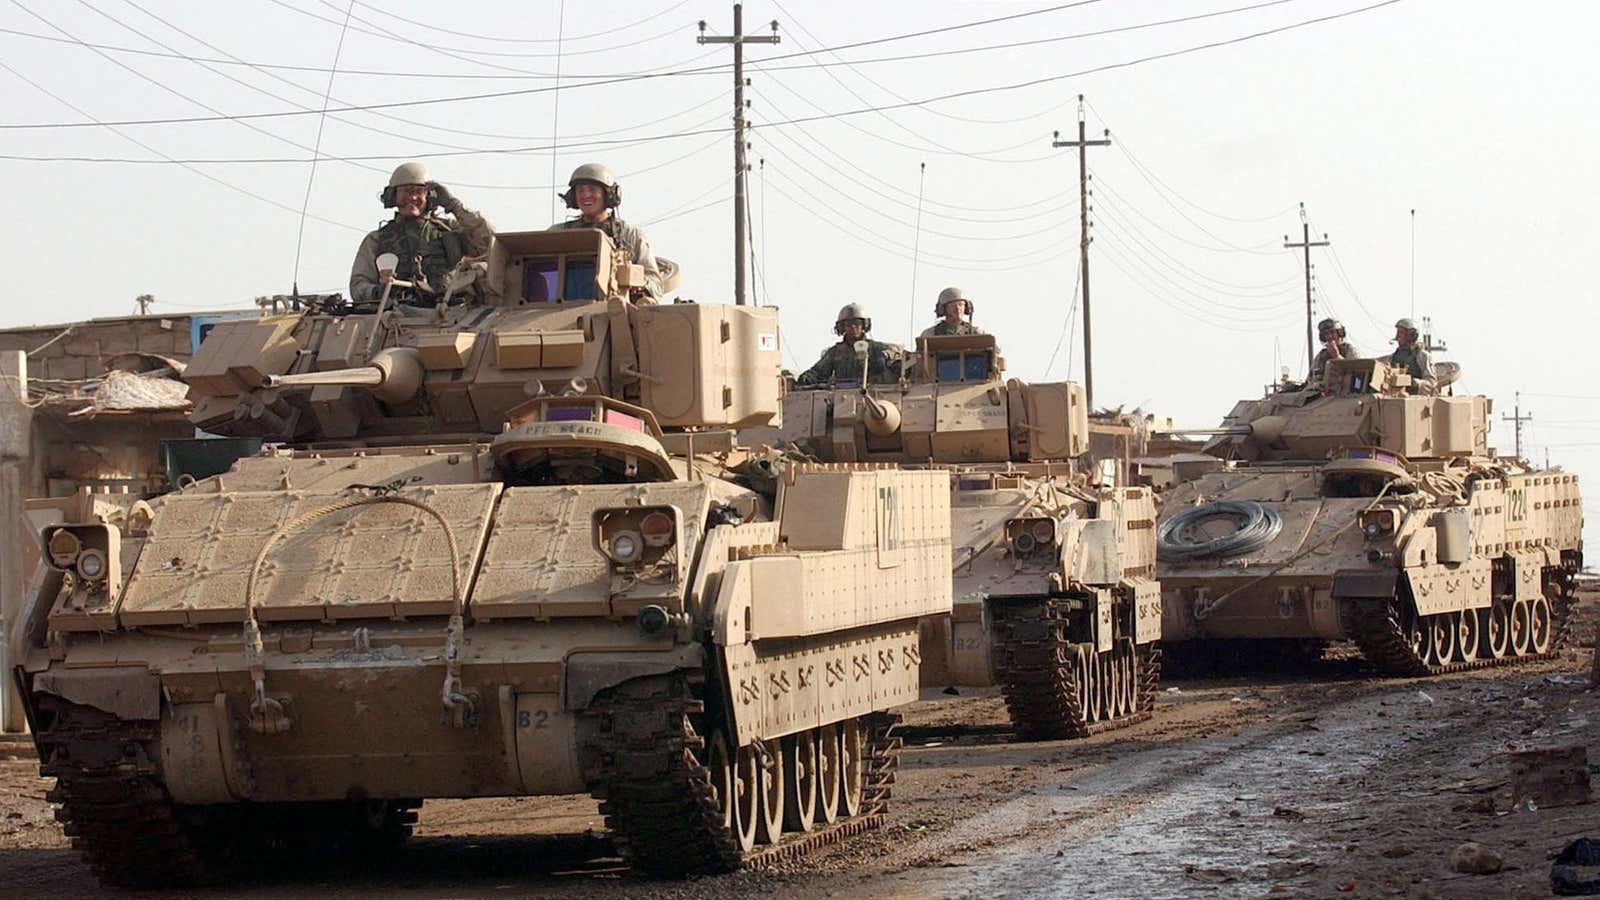 The Bradley fighting vehicle in Iraq, 2003.